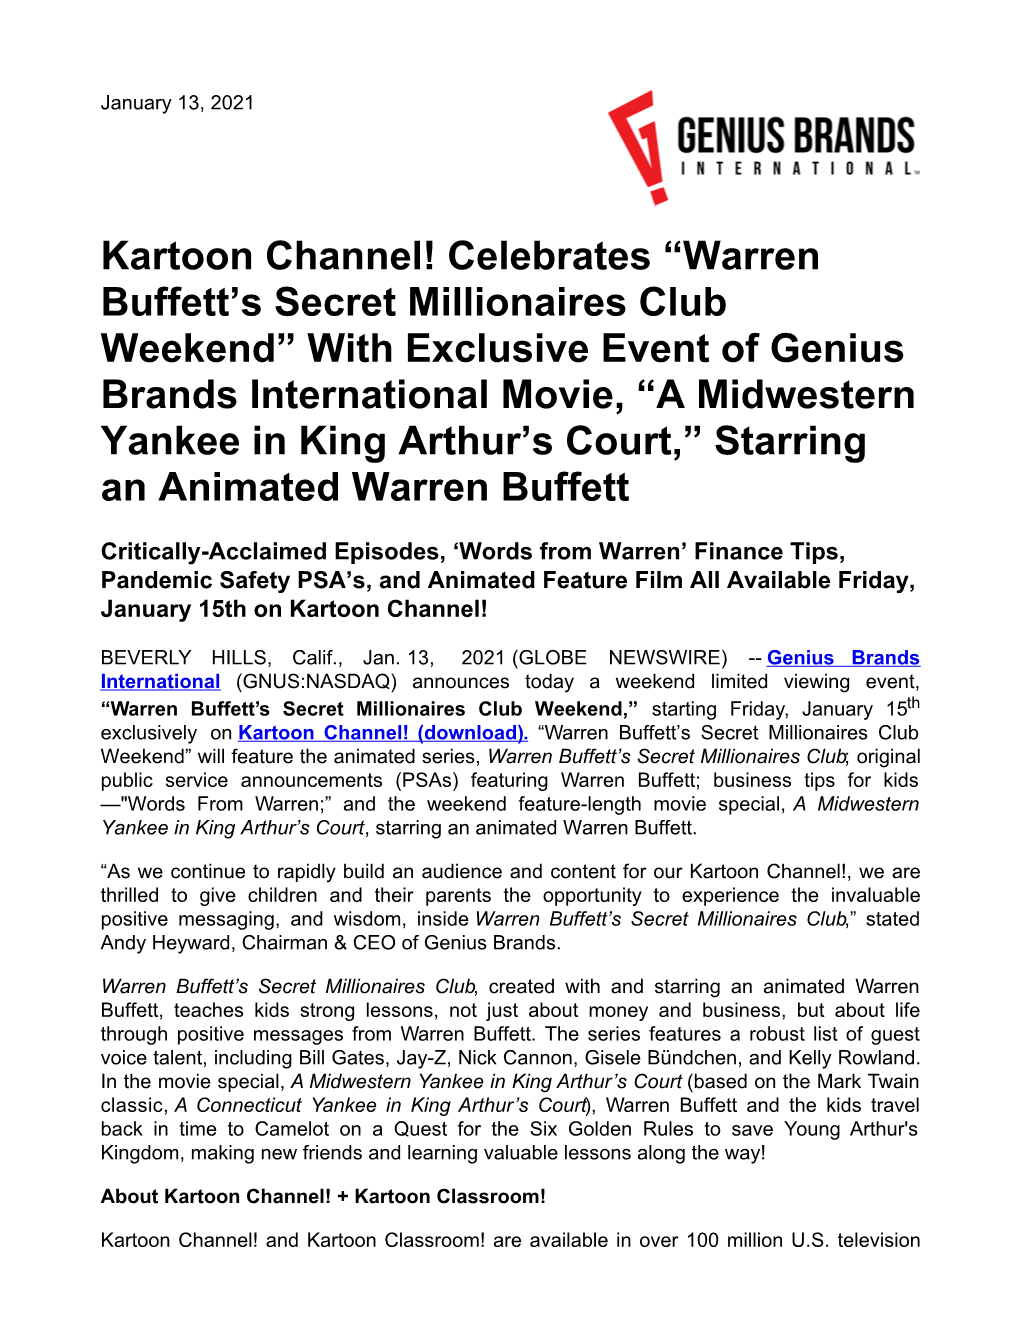 Kartoon Channel! Celebrates “Warren Buffett's Secret Millionaires Club Weekend” with Exclusive Event of Genius Brands Inte